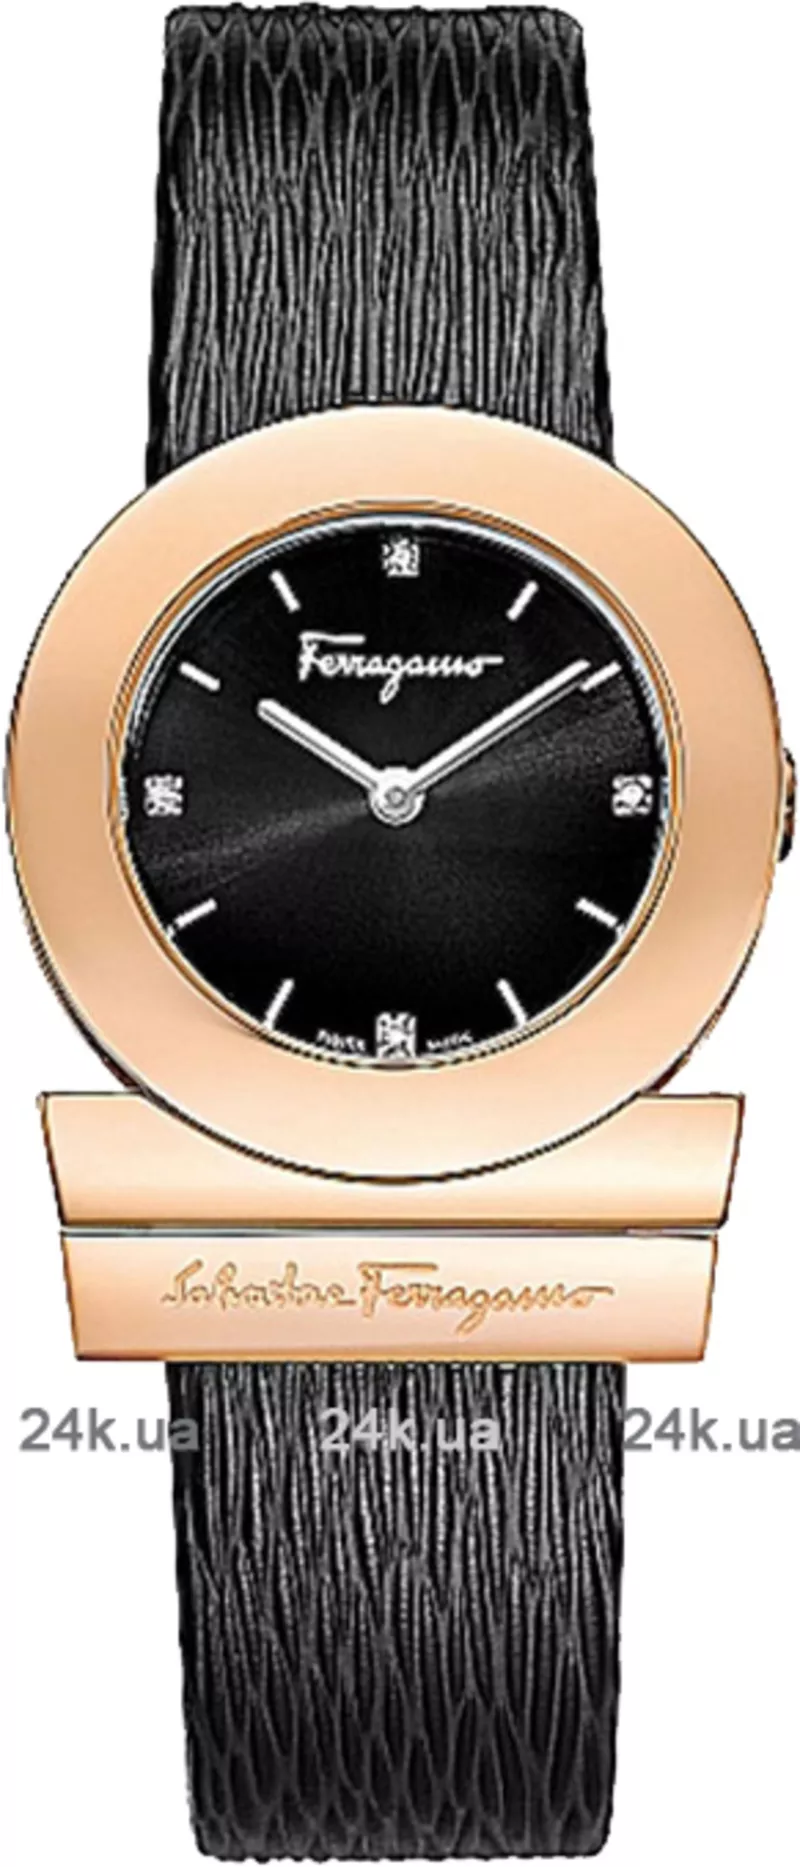 Часы Salvatore Ferragamo Fr56sbq5059 s009